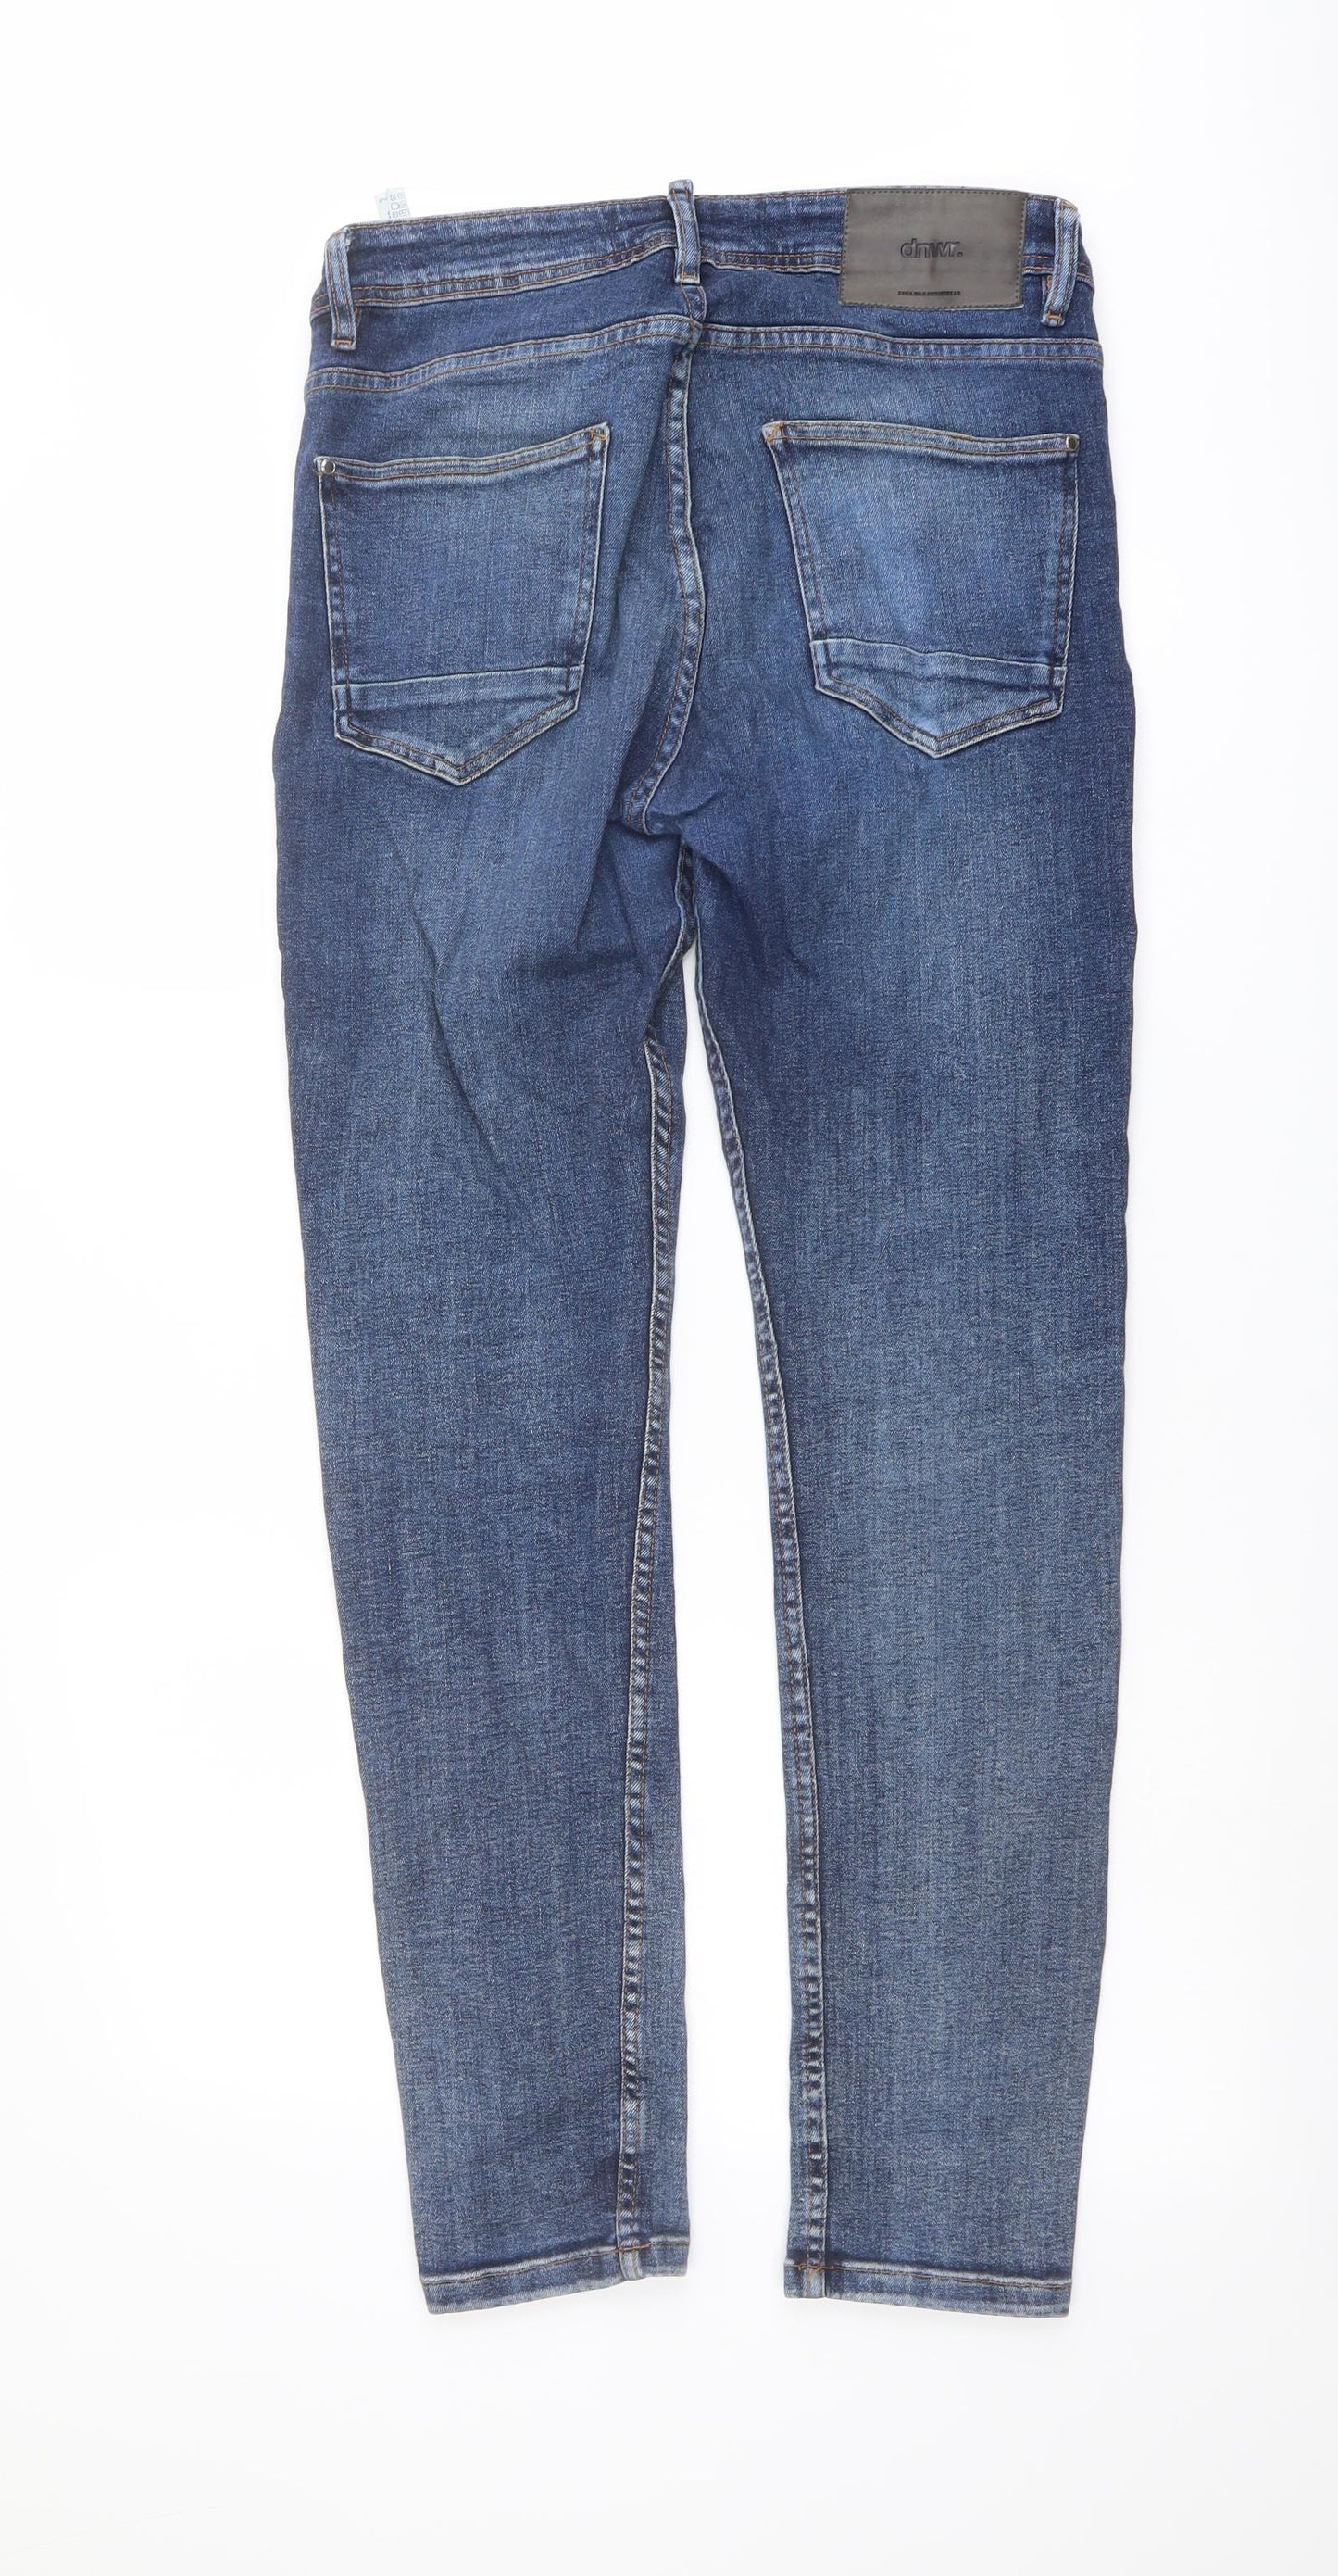 Zara Mens Blue Cotton Skinny Jeans Size 30 in L29 in Regular Button